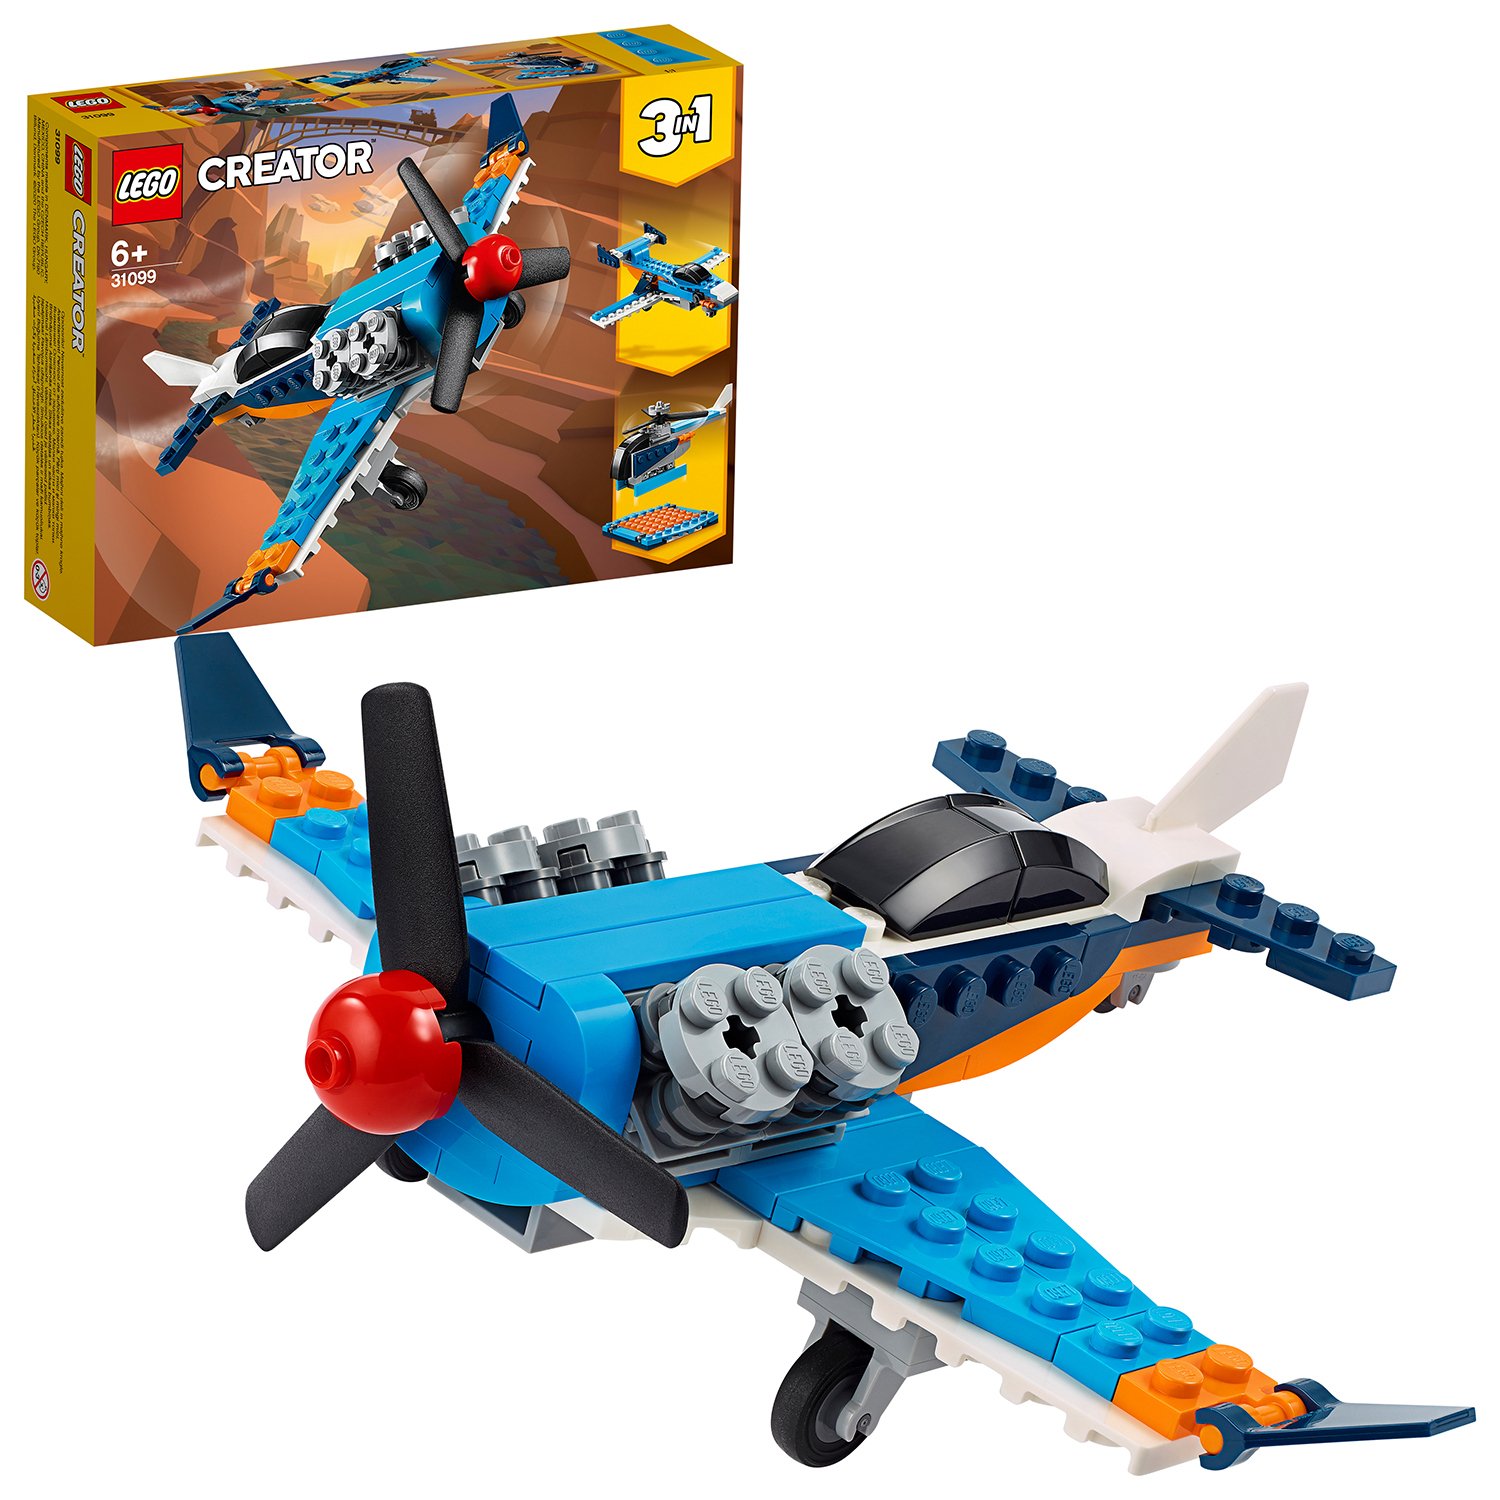 LEGO Creator 3-in-1 Propeller Plane Building Set Review